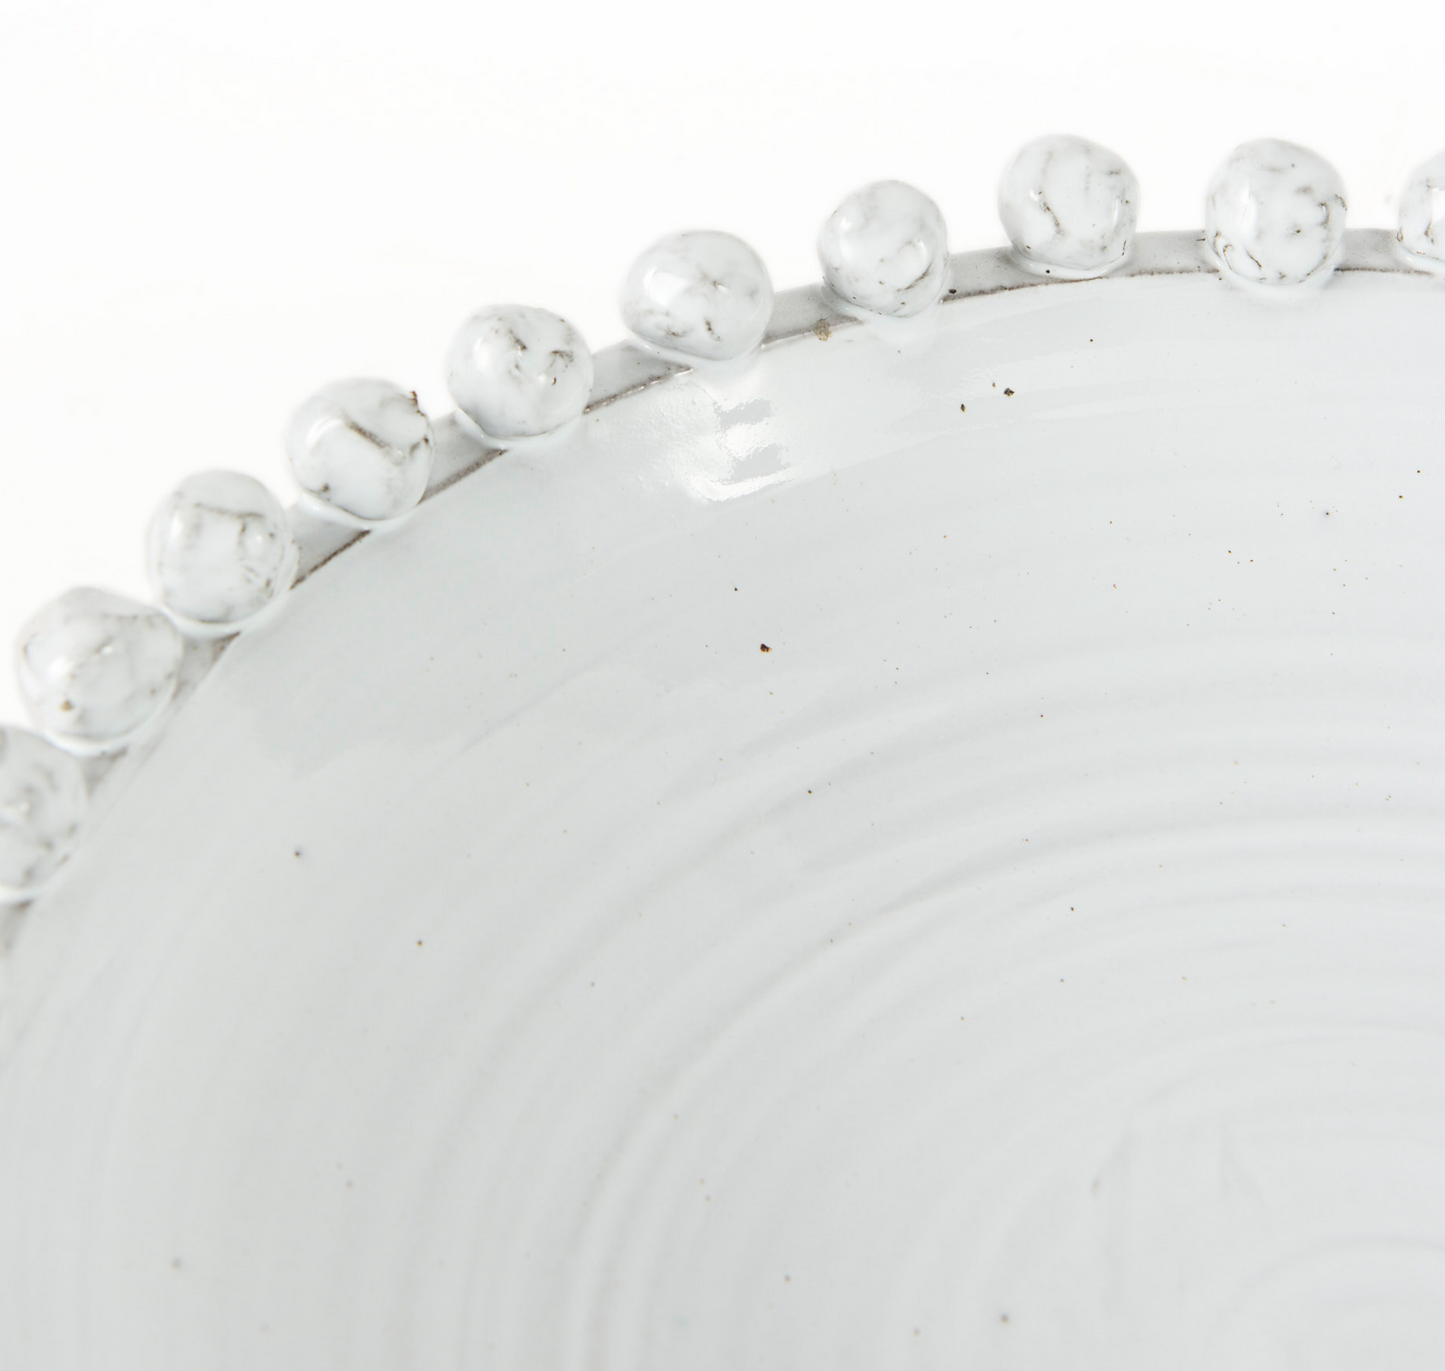 Round Off-White Glazed Decorative Bowl